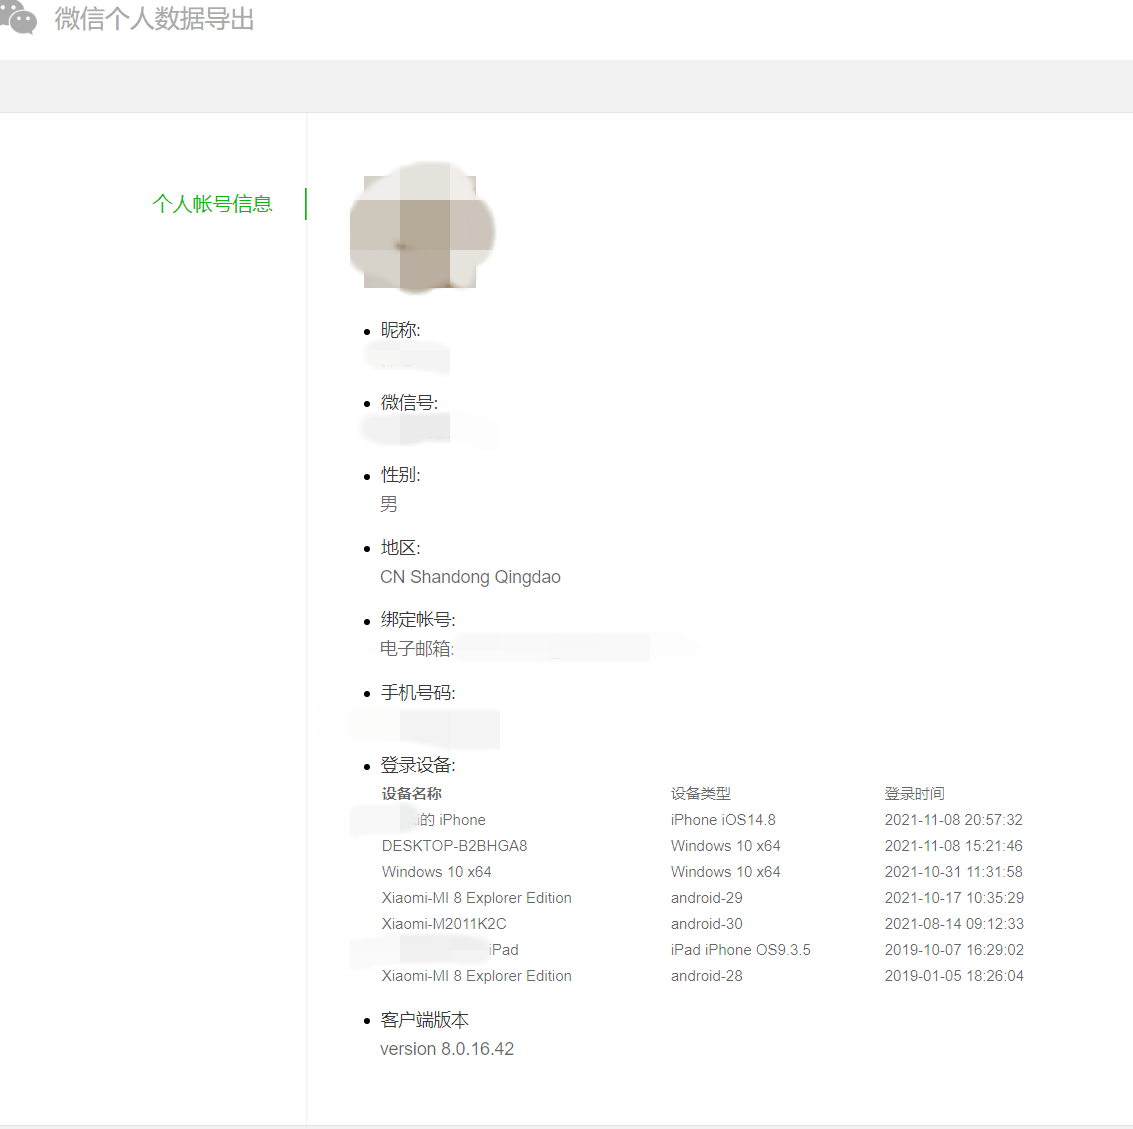  WeChat 支持导出个人数据，微信支持导出个人信息